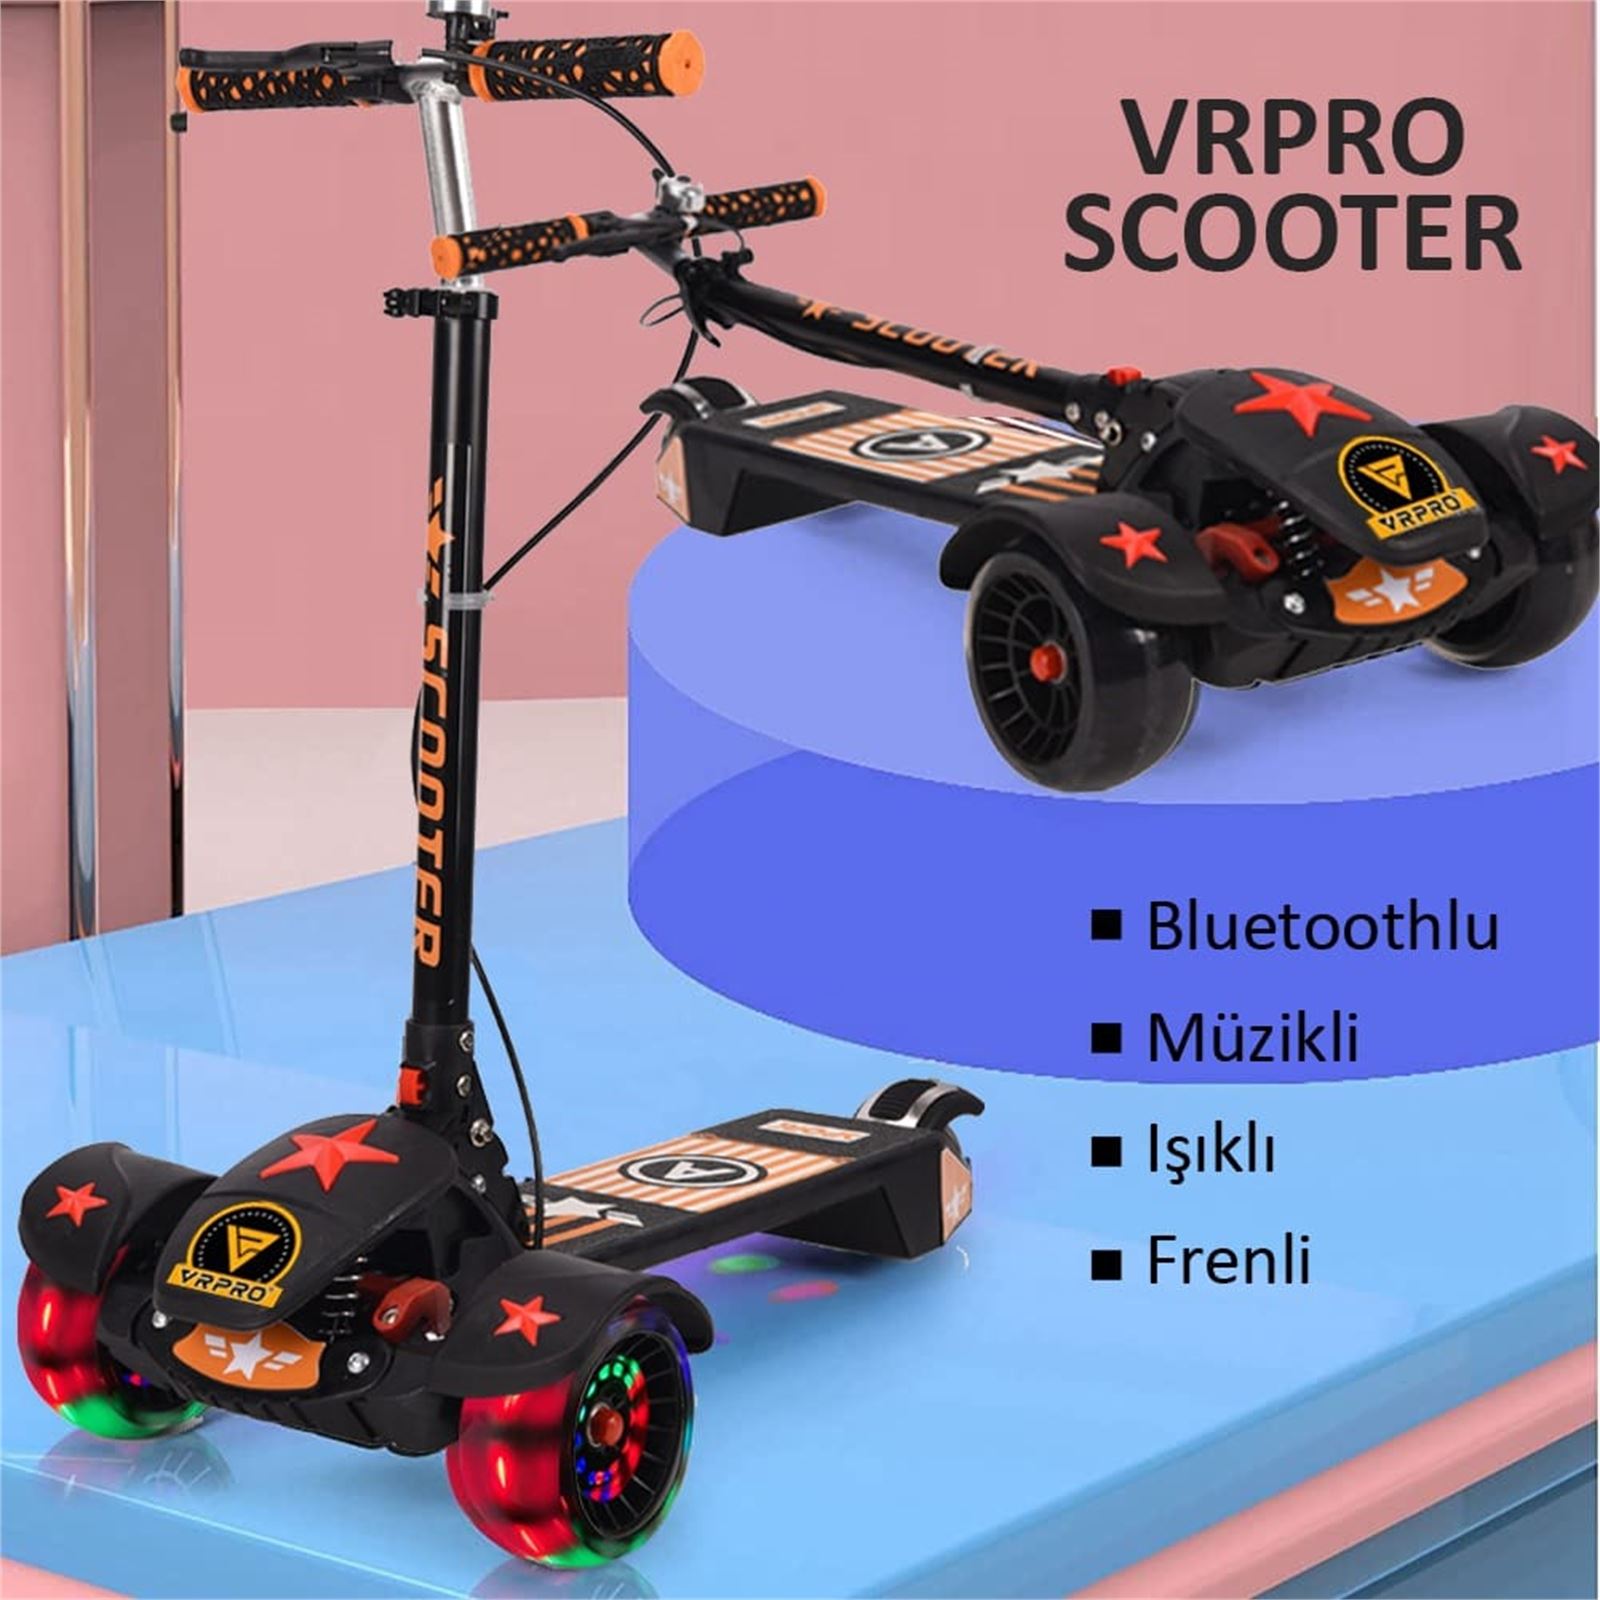 Vrpro Scooter Bluetoothlu Müzikli ve Led Işıklı Frenli Siyah-3188-5 